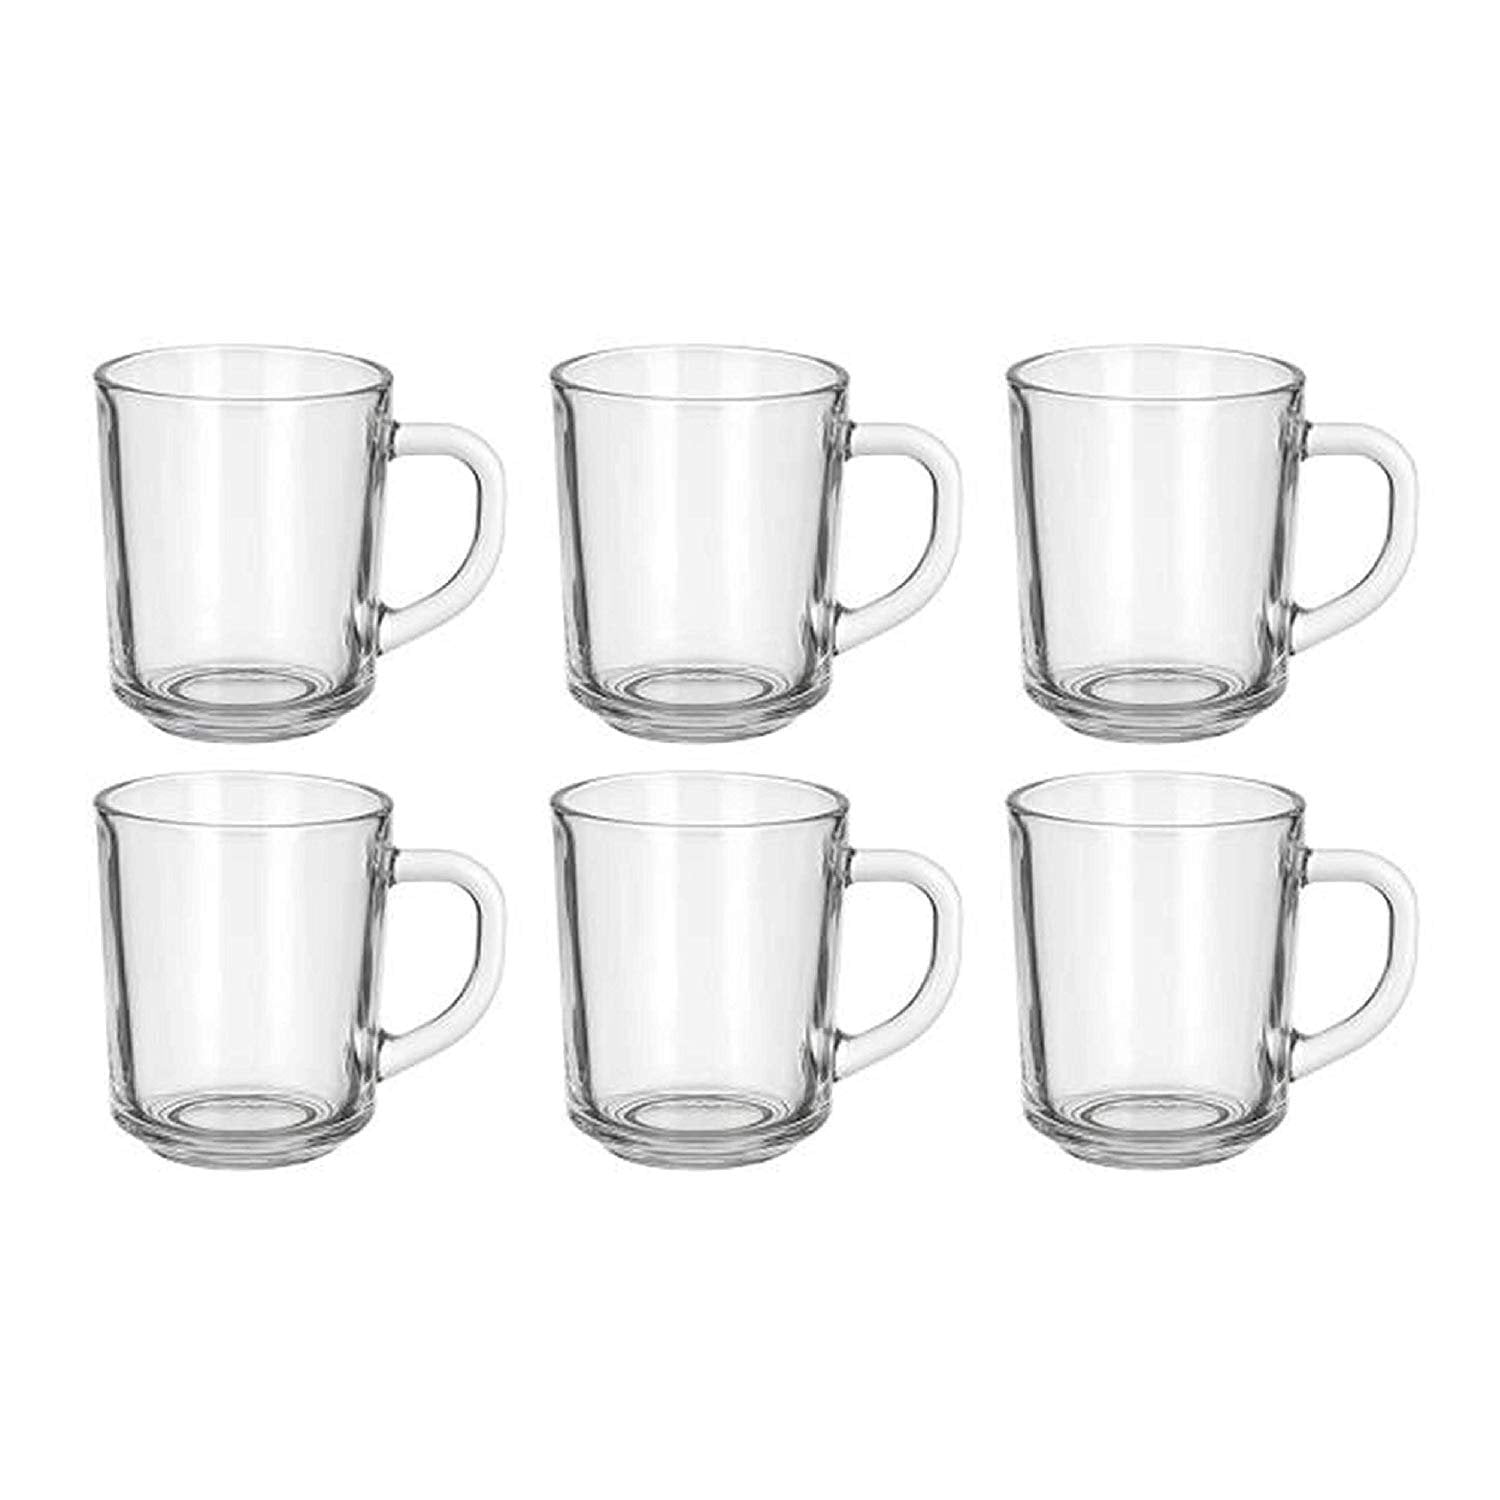 Caf Glass Coffee Mugs - Clear, 8 oz Great For Tea, Coffee, Juice ...